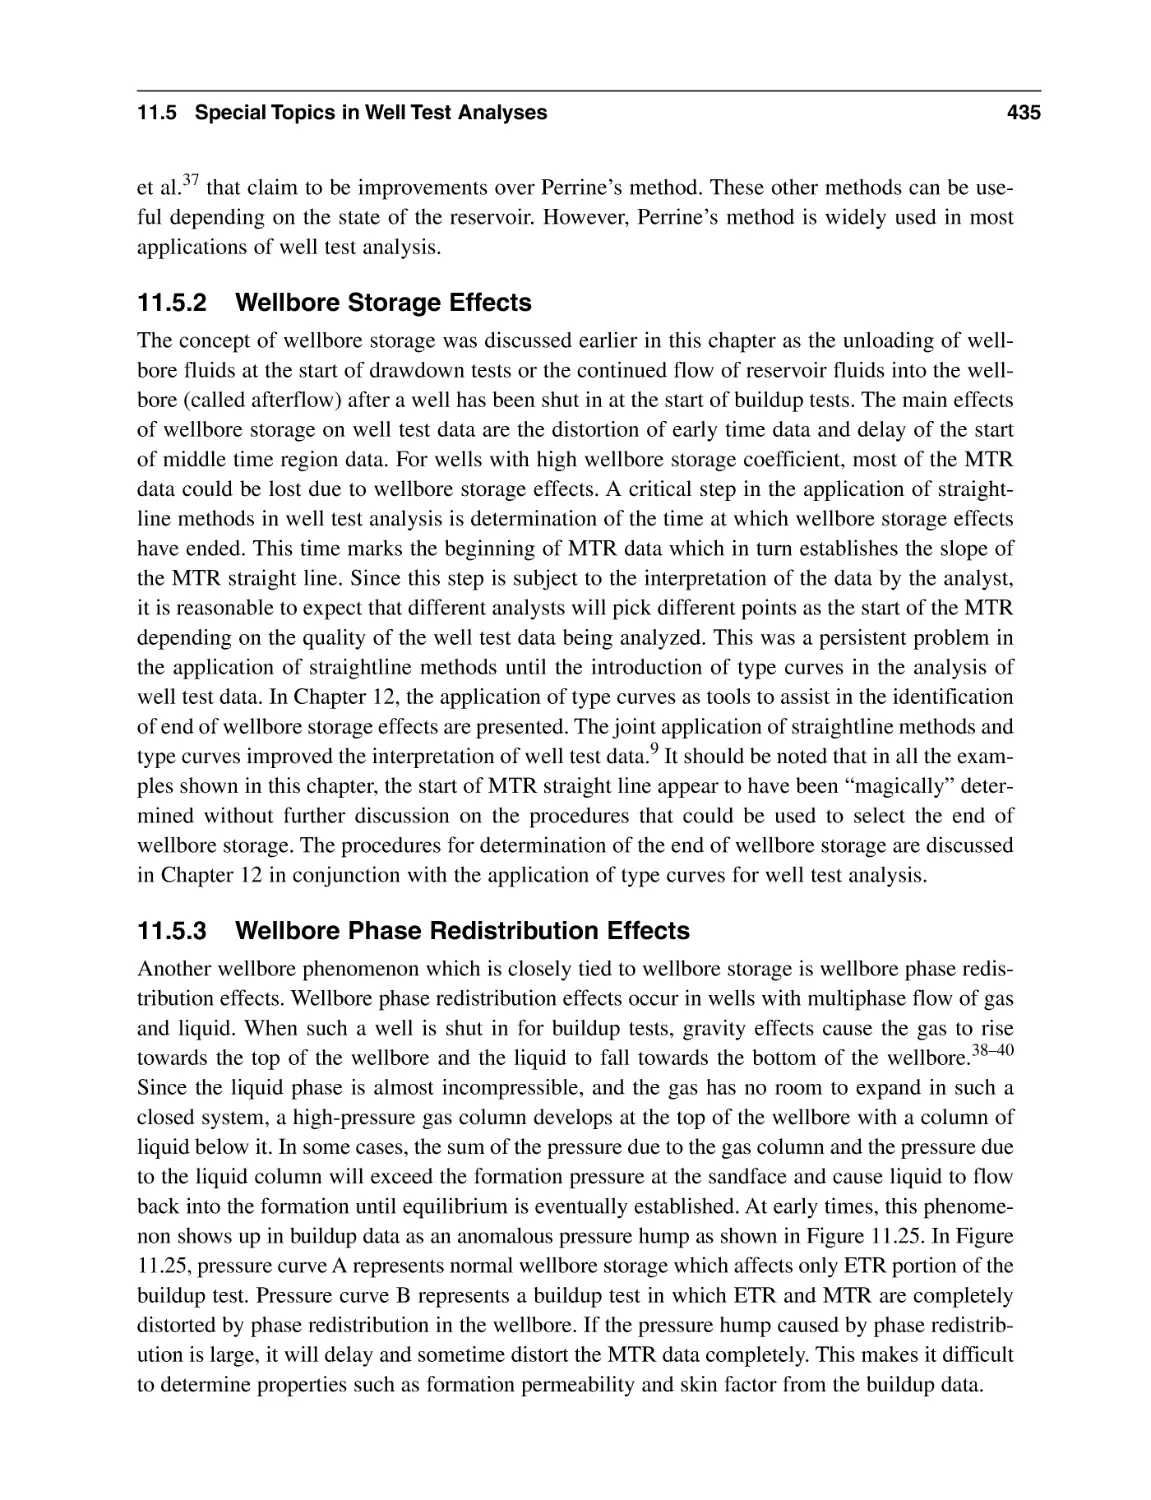 11.5.2 Wellbore Storage Effects
11.5.3 Wellbore Phase Redistribution Effects